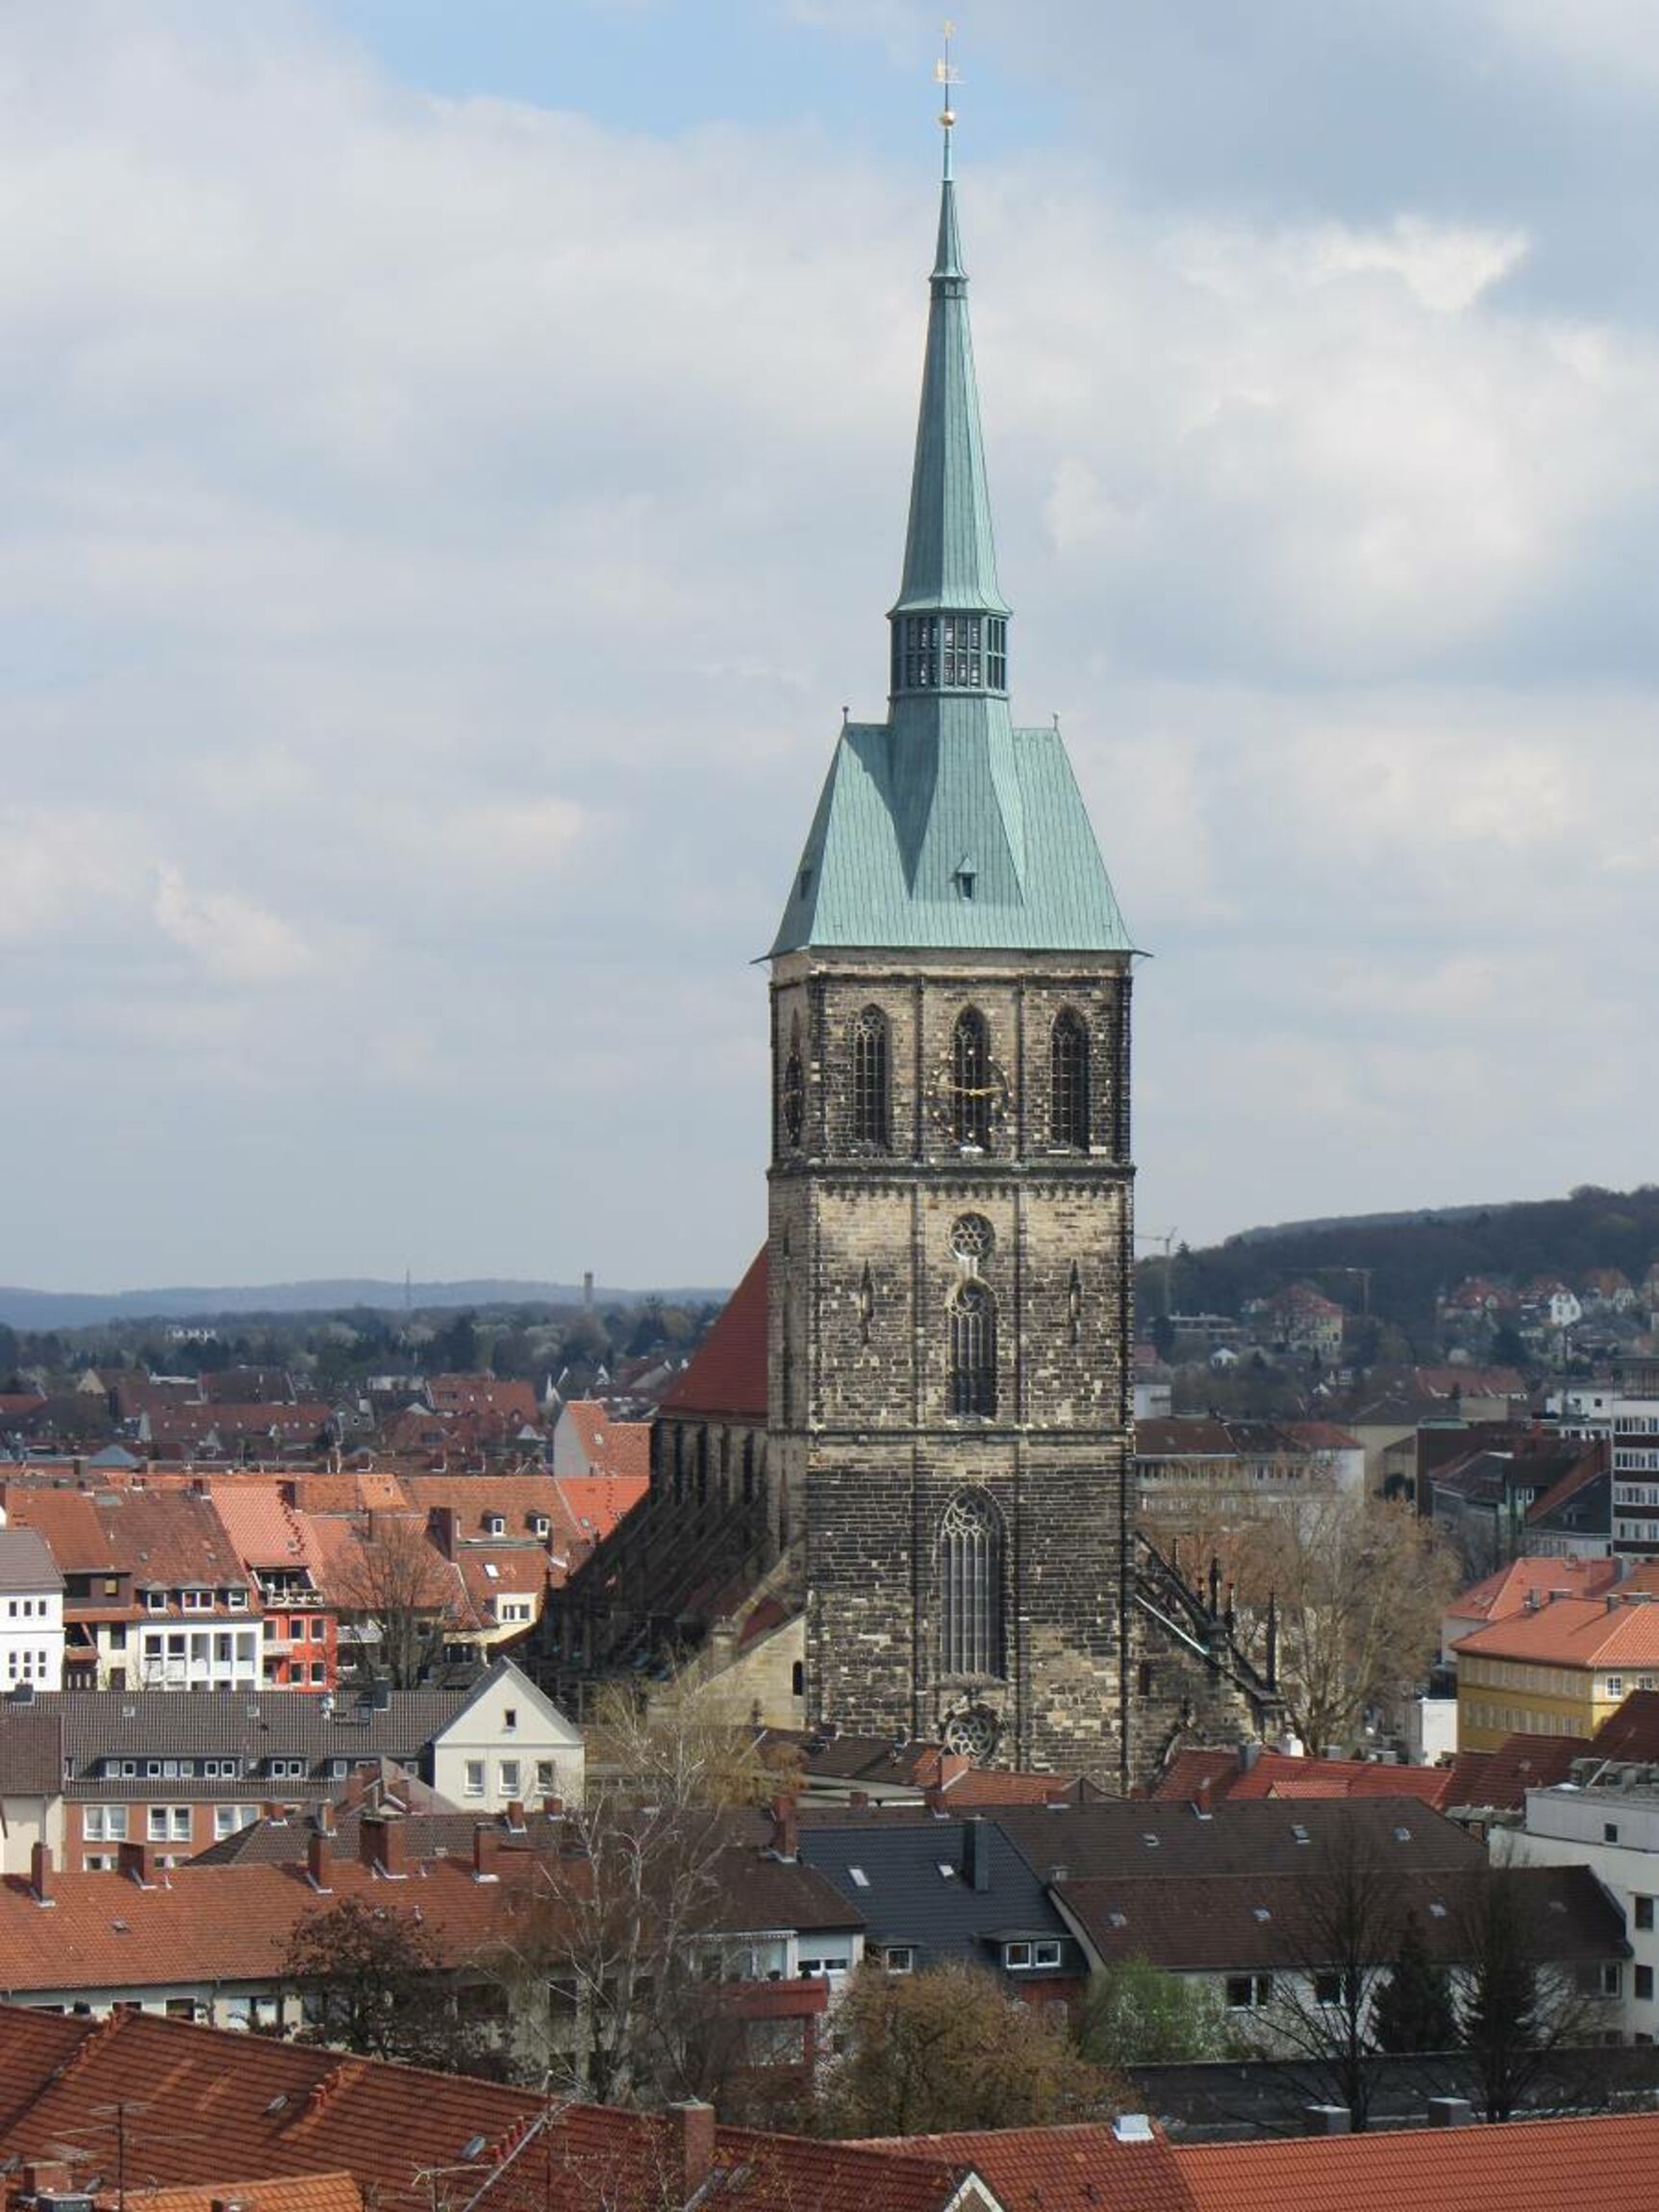 St. Andreas Hildesheim_(1600_x_1200)